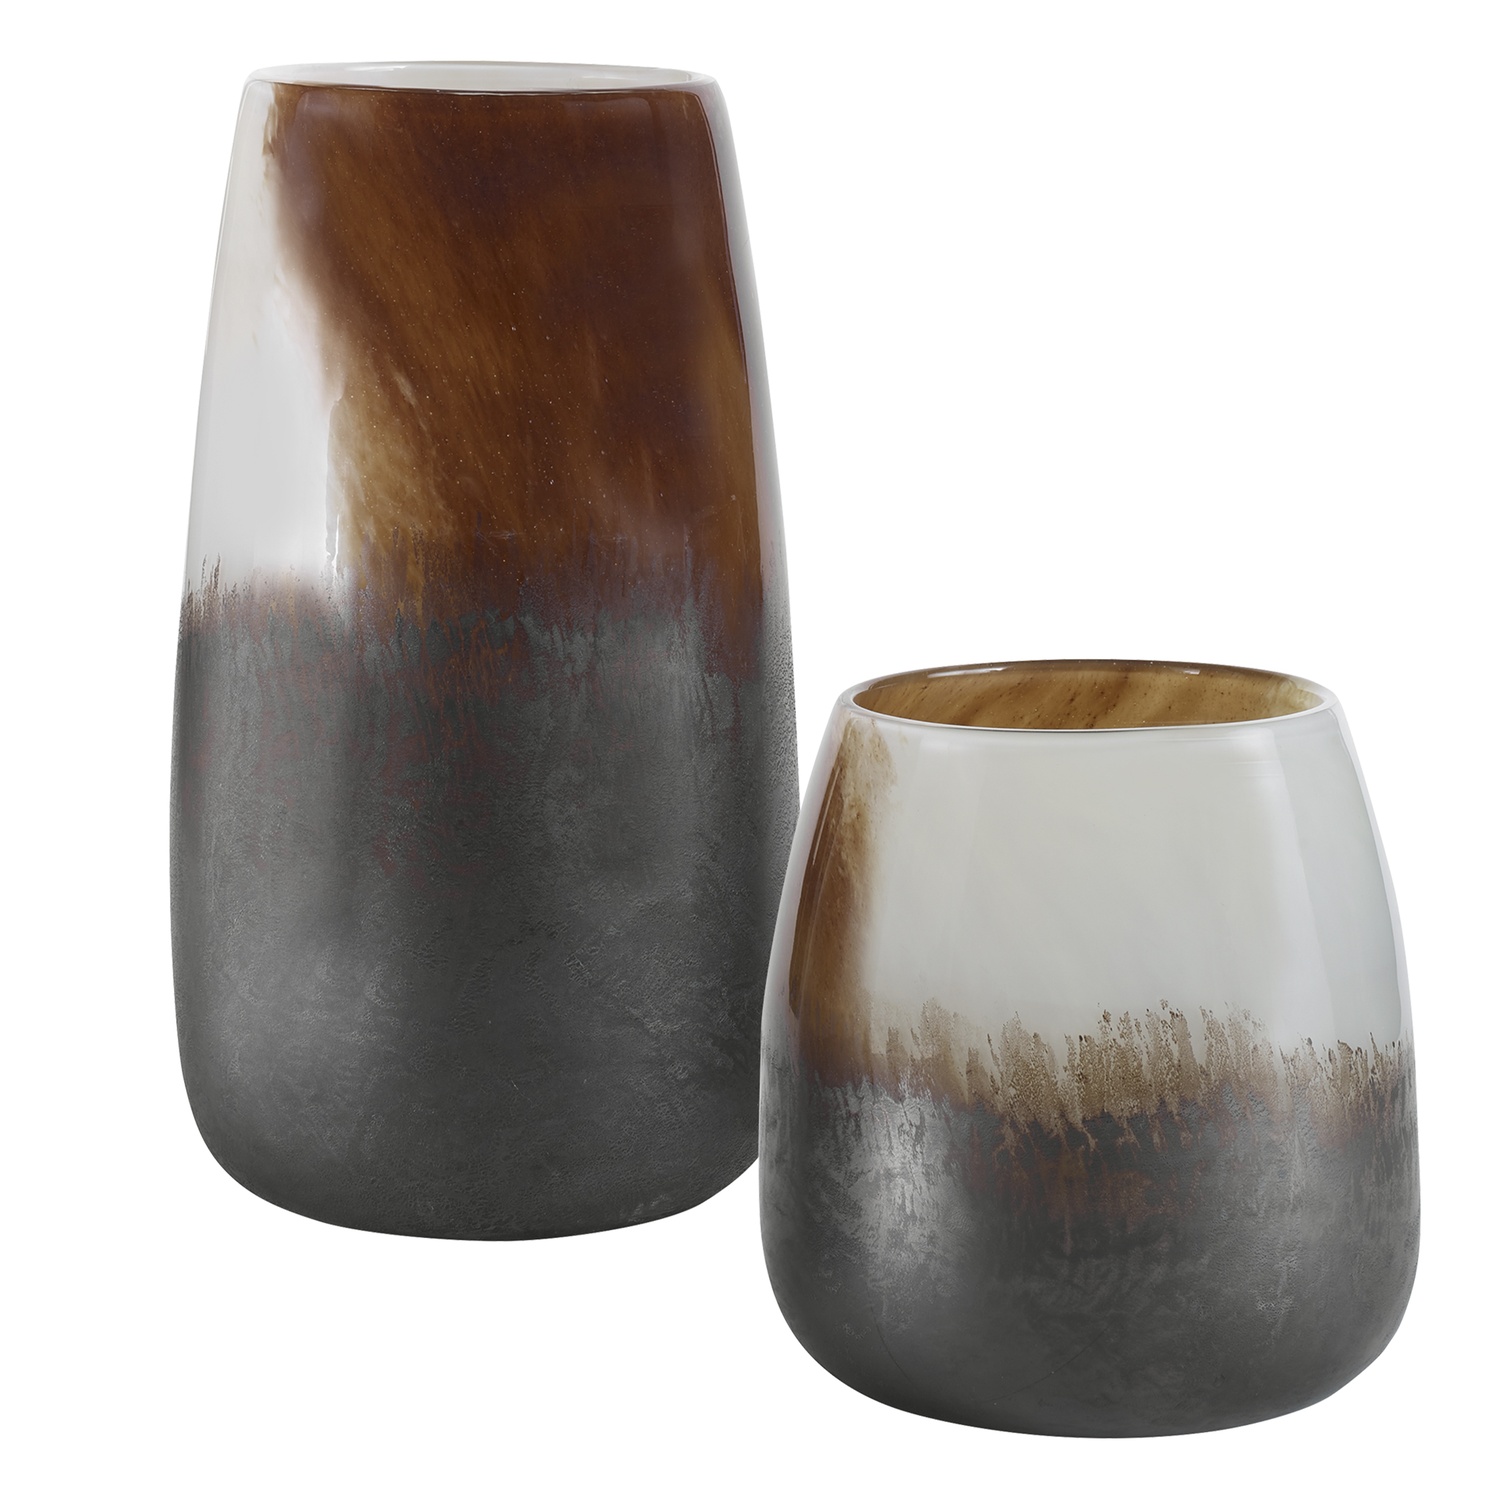 Desert Wind-Vases Urns & Finials